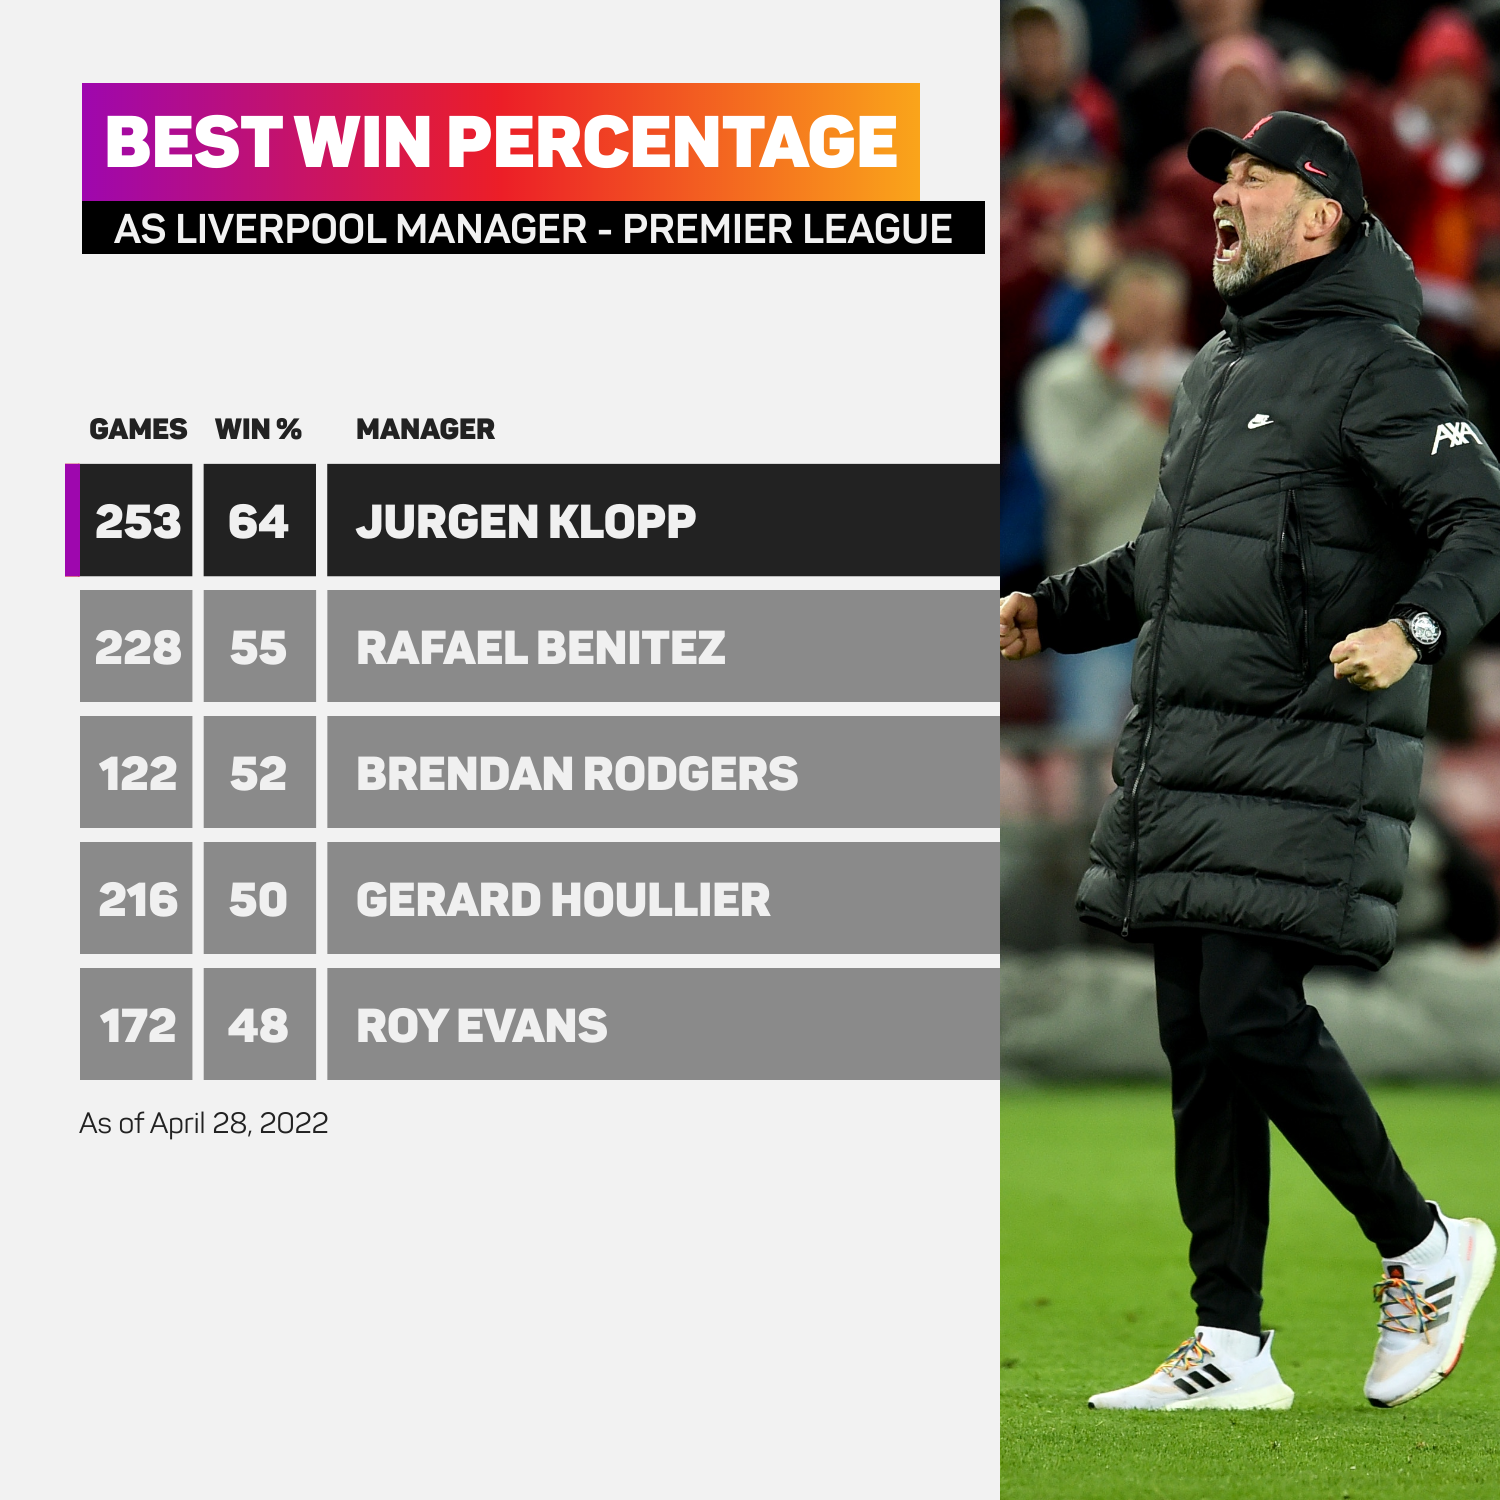 Liverpool manager Premier League win percentage